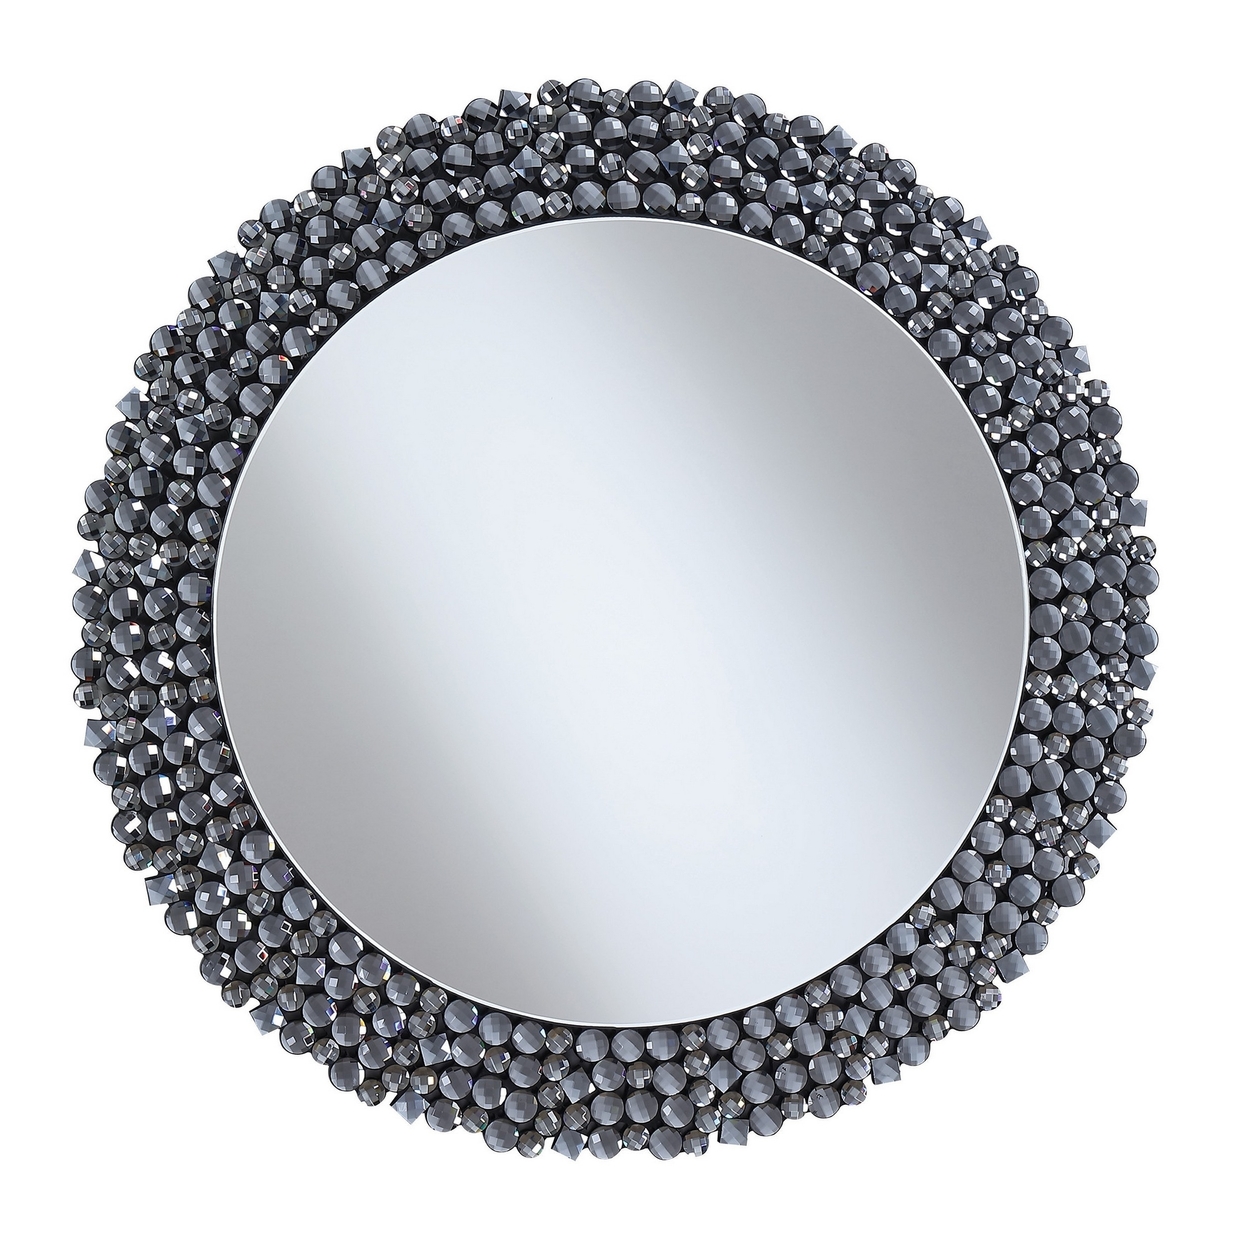 Beautifully Designed Round Contemporary Wall Mirror, Silver- Saltoro Sherpi